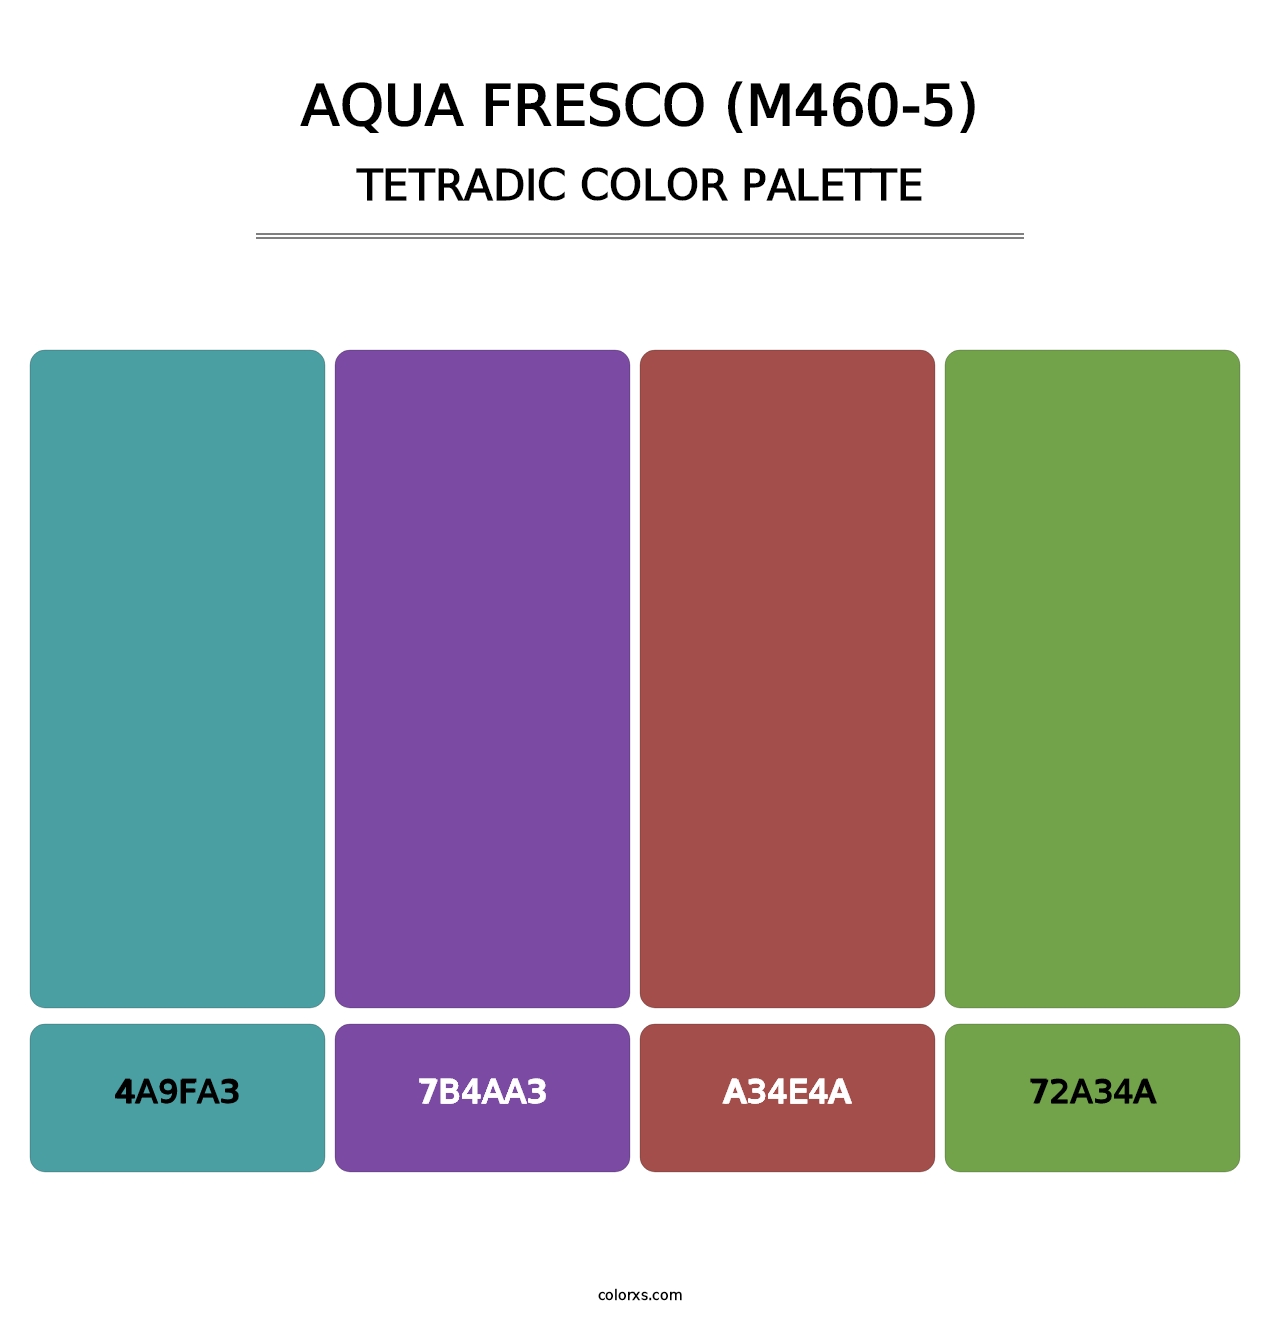 Aqua Fresco (M460-5) - Tetradic Color Palette